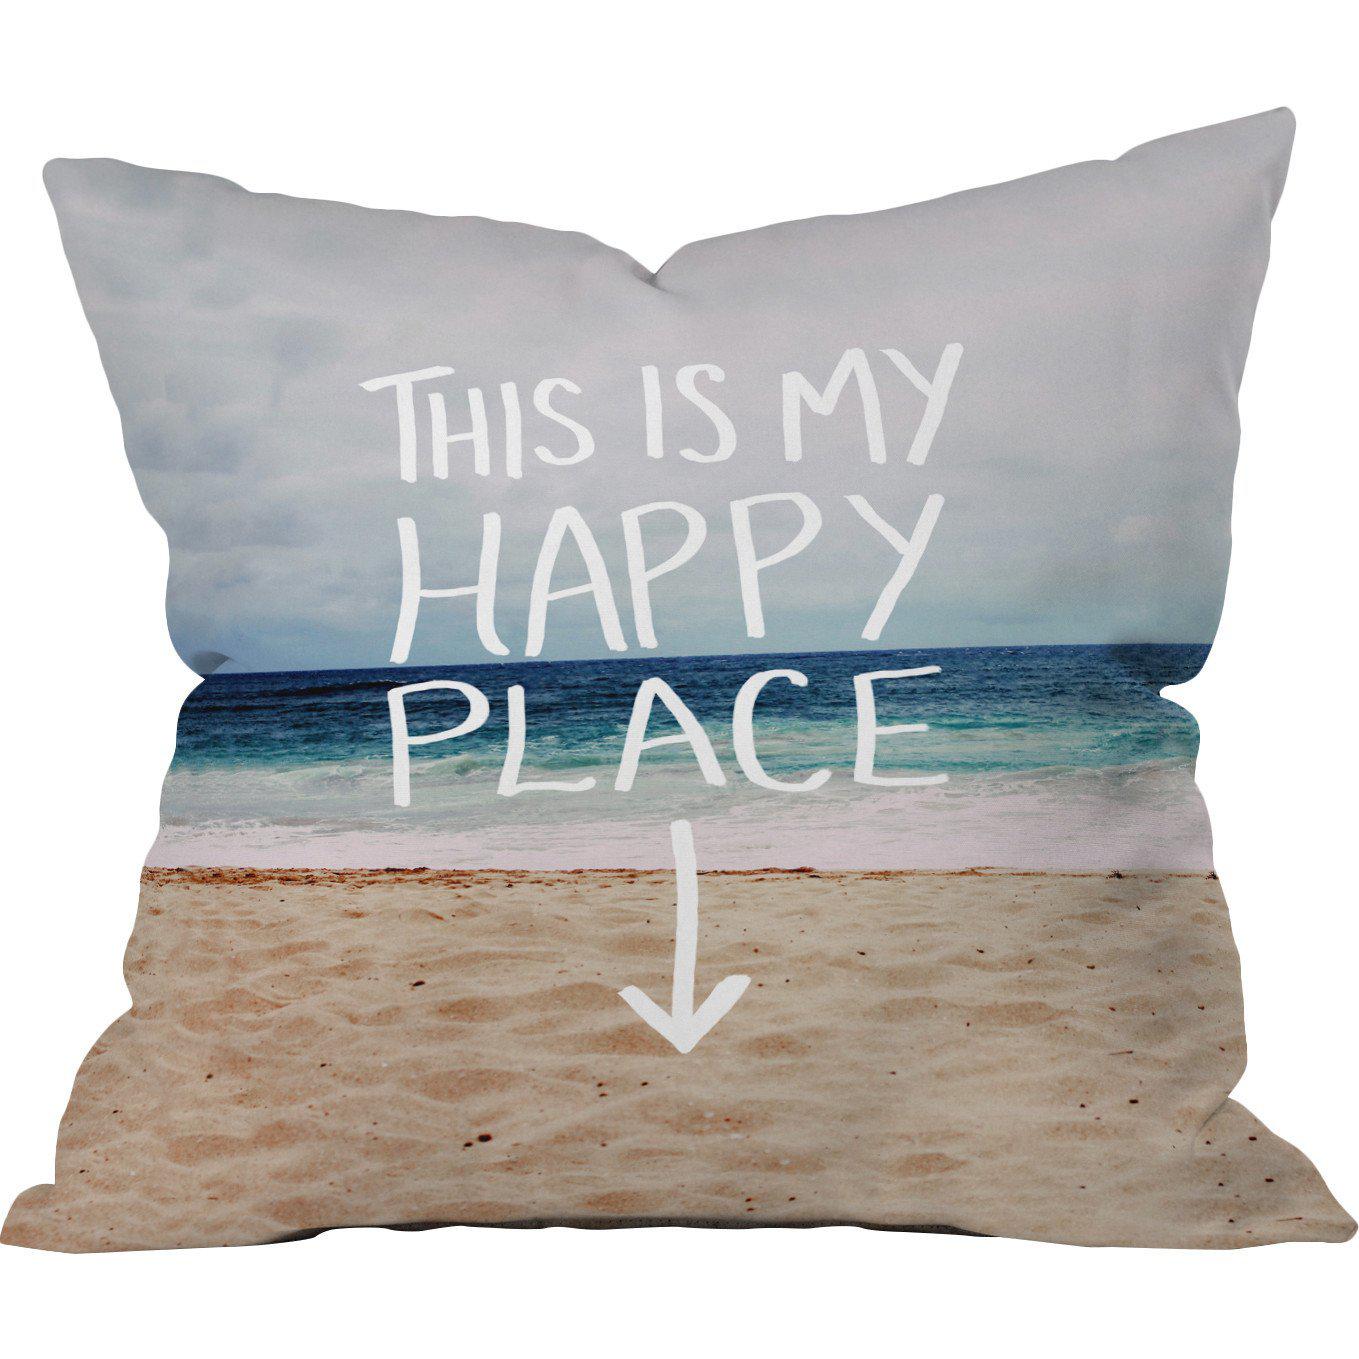 Happy Place Pillow Cover ❤ SALE!